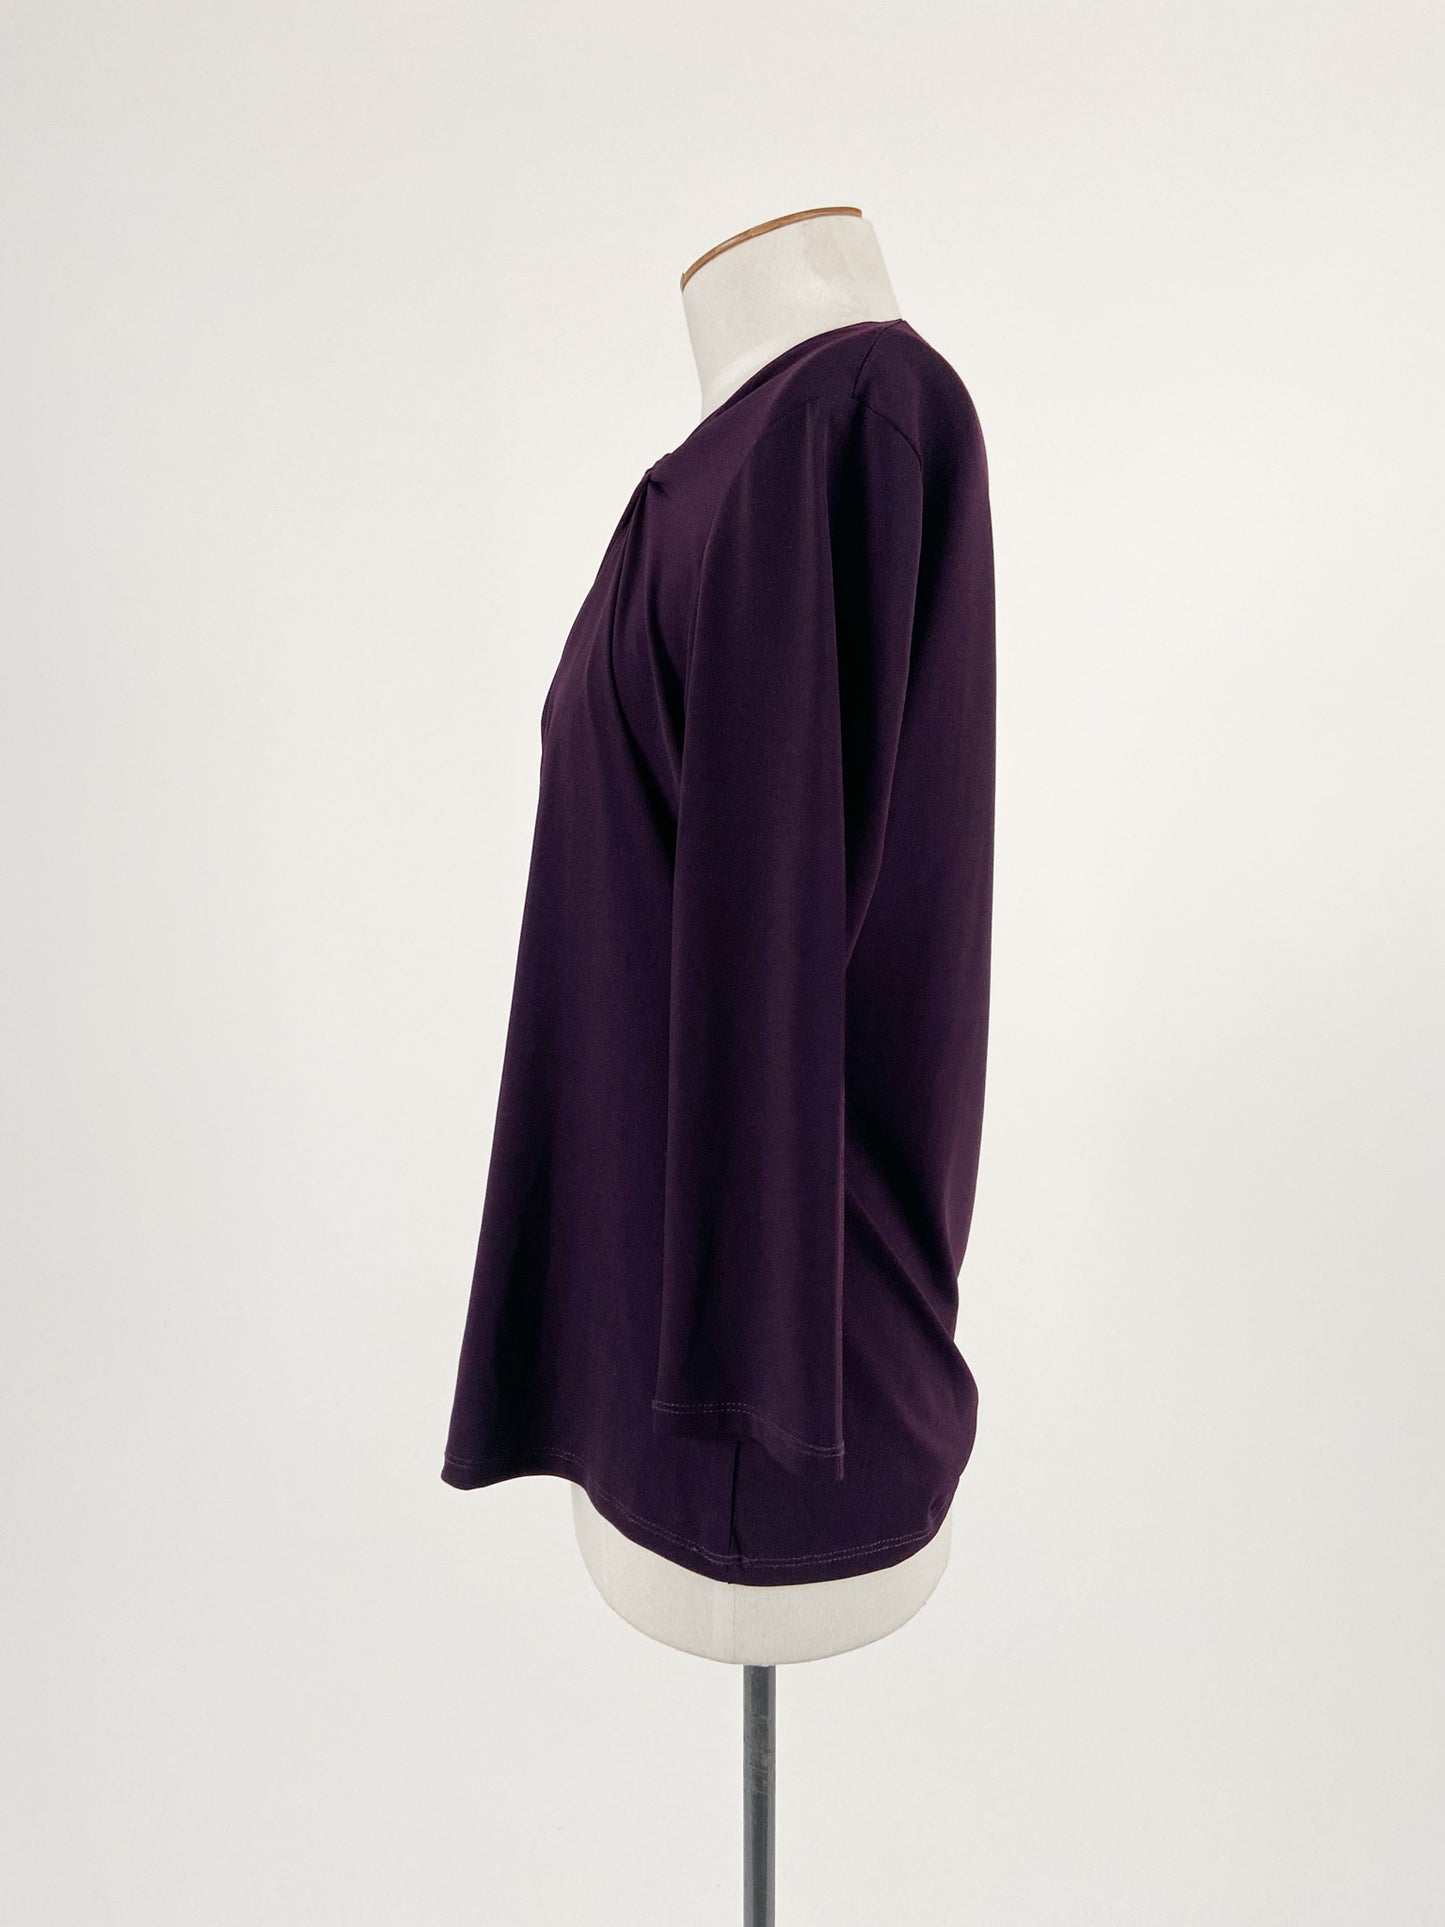 Oliver Black | Purple Workwear Top | Size M